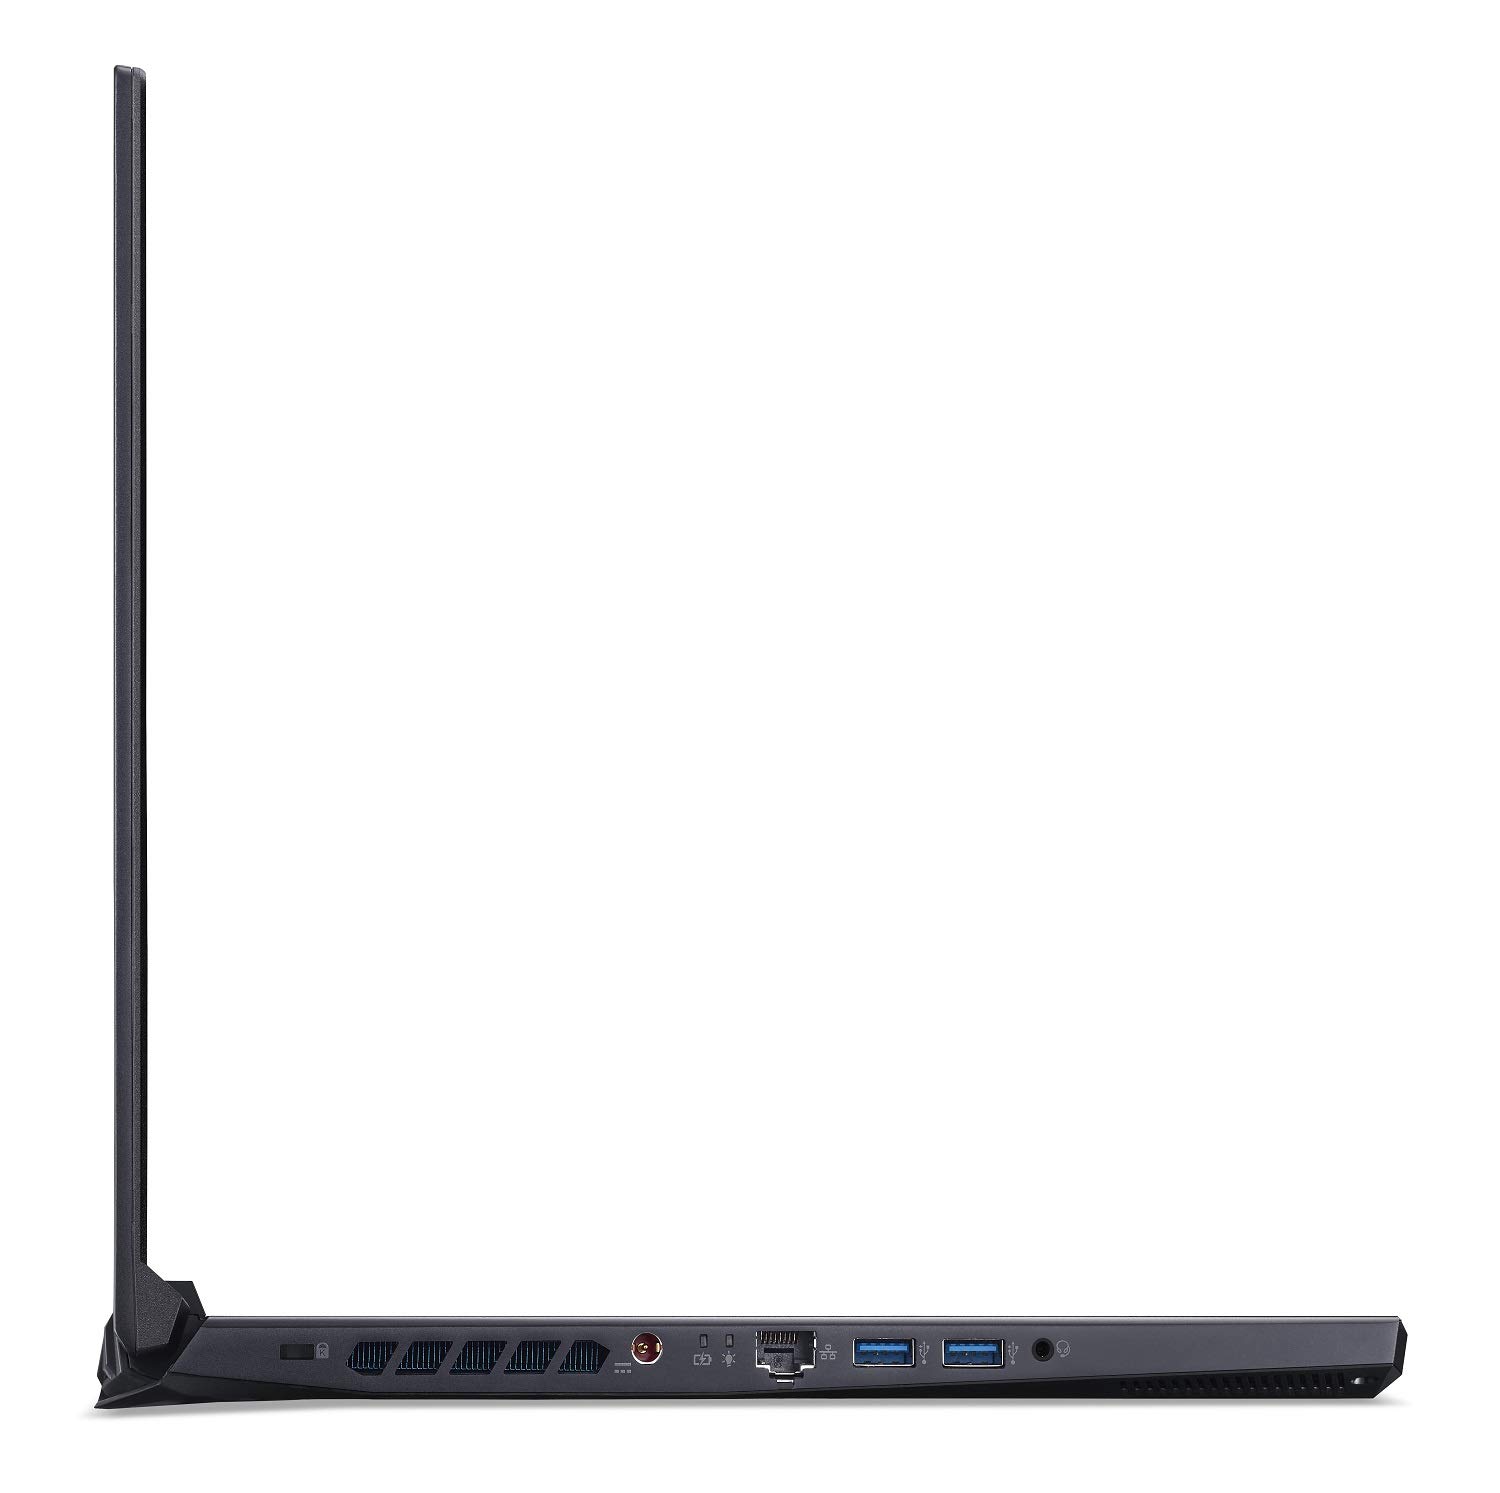 Acer Predator Helios 300 Gaming Laptop PC, 17.3